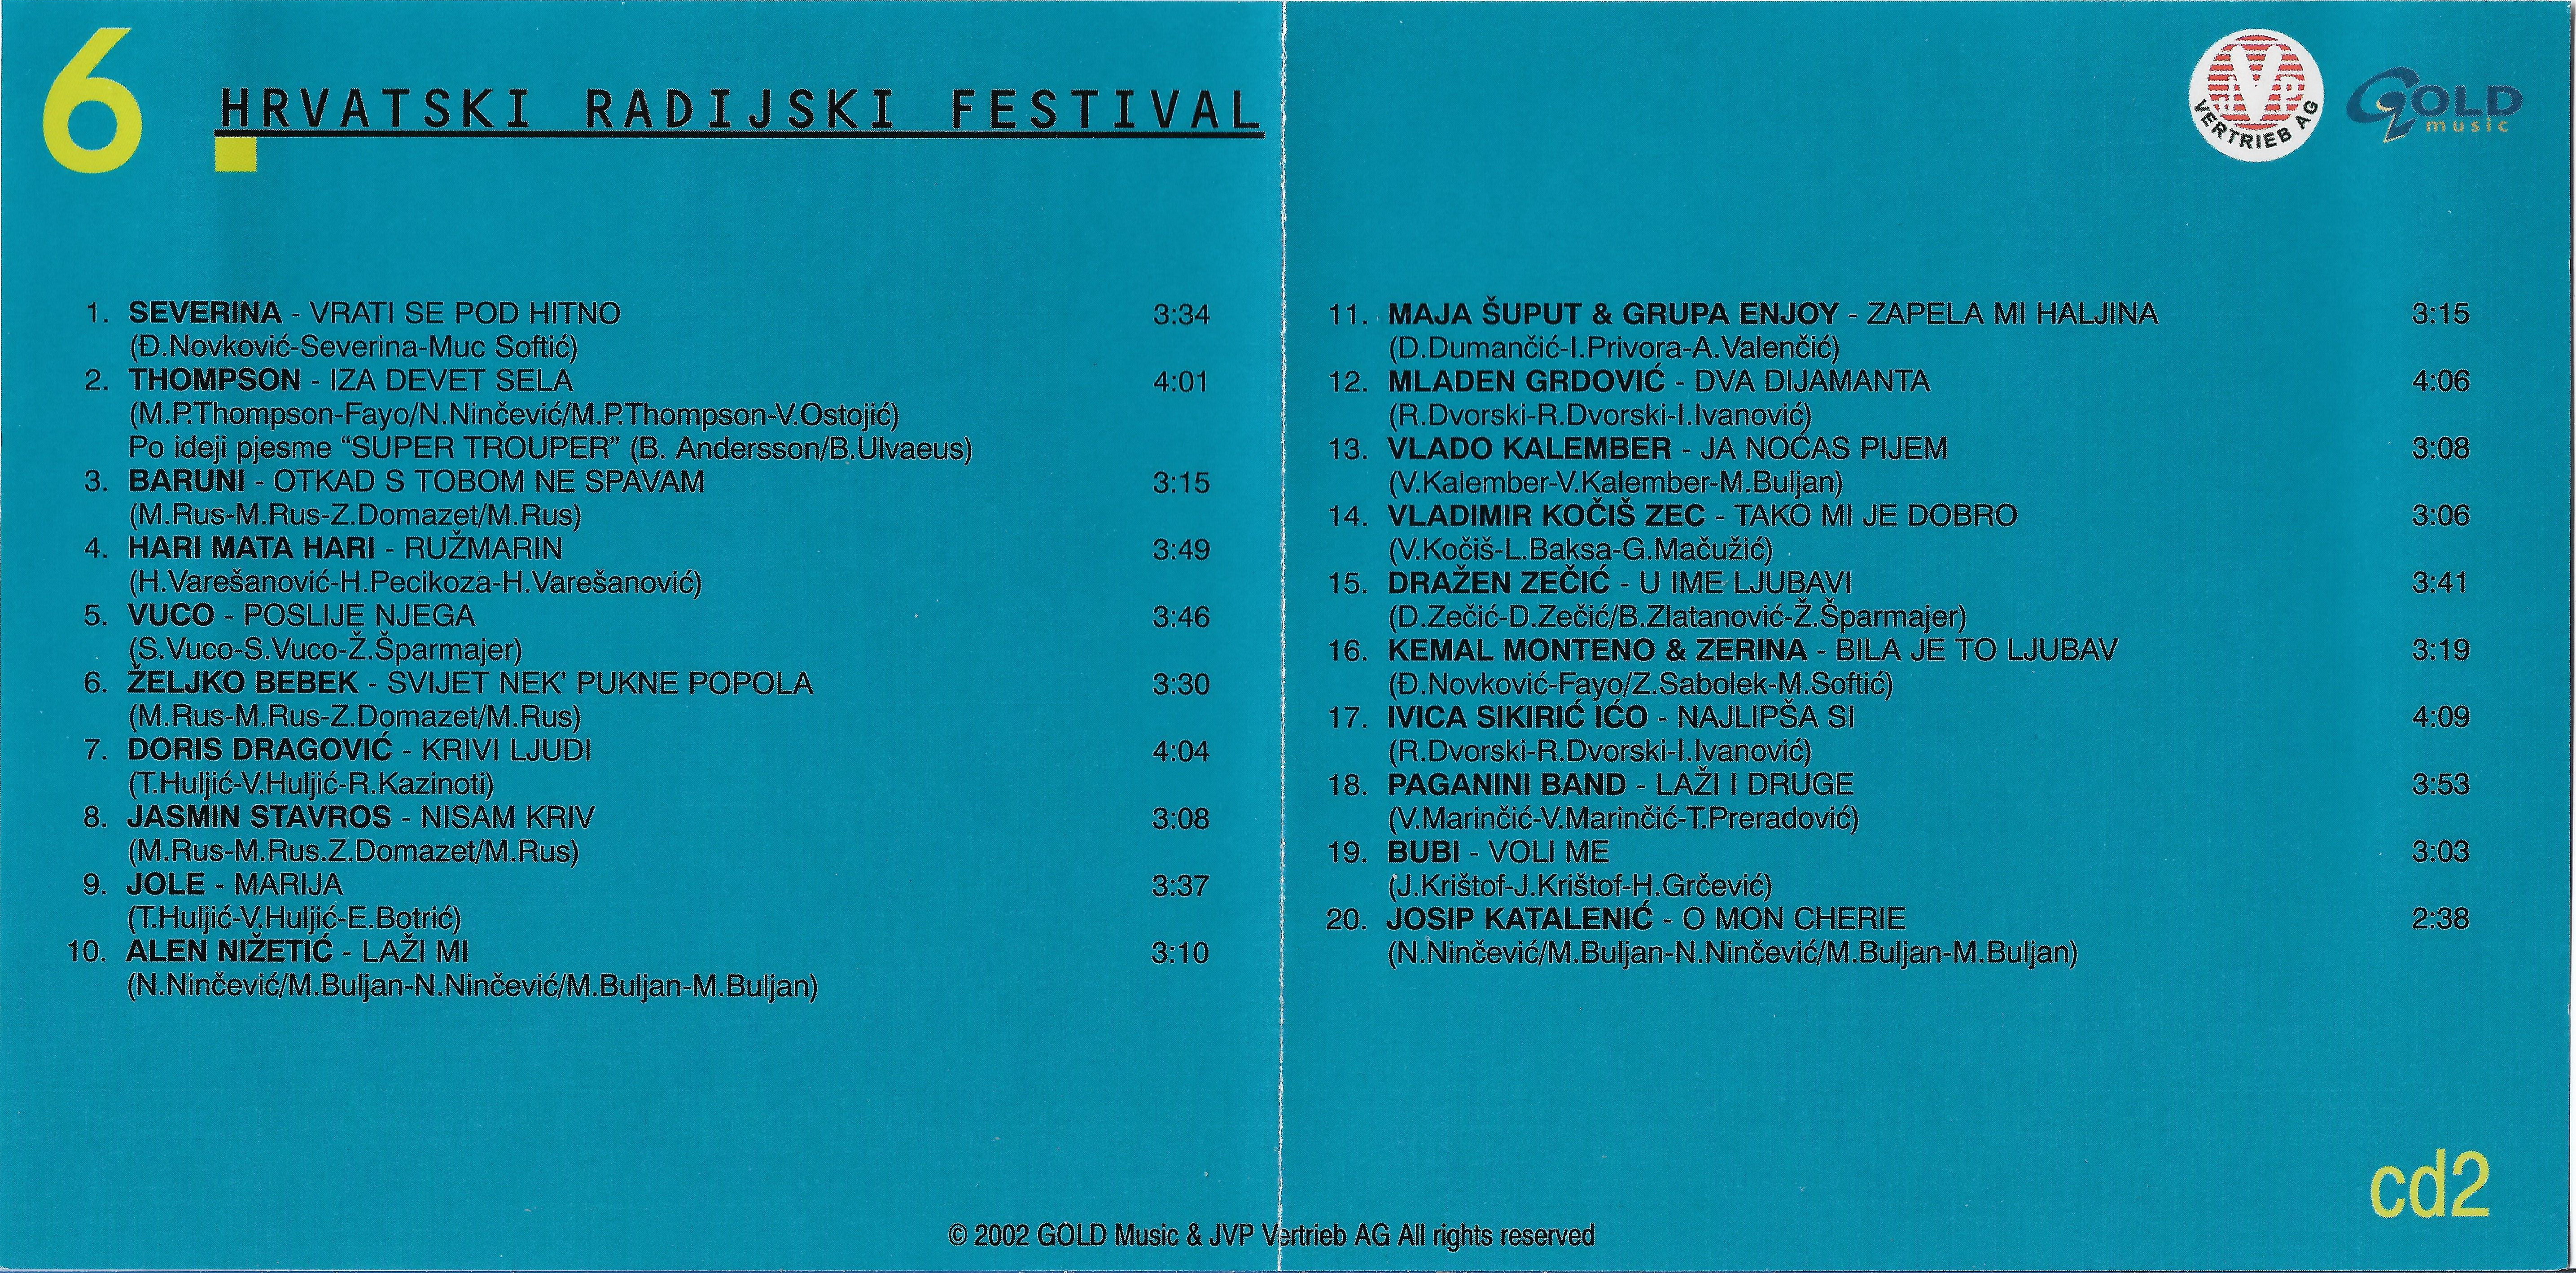 Vodice 2002 CD 2 2